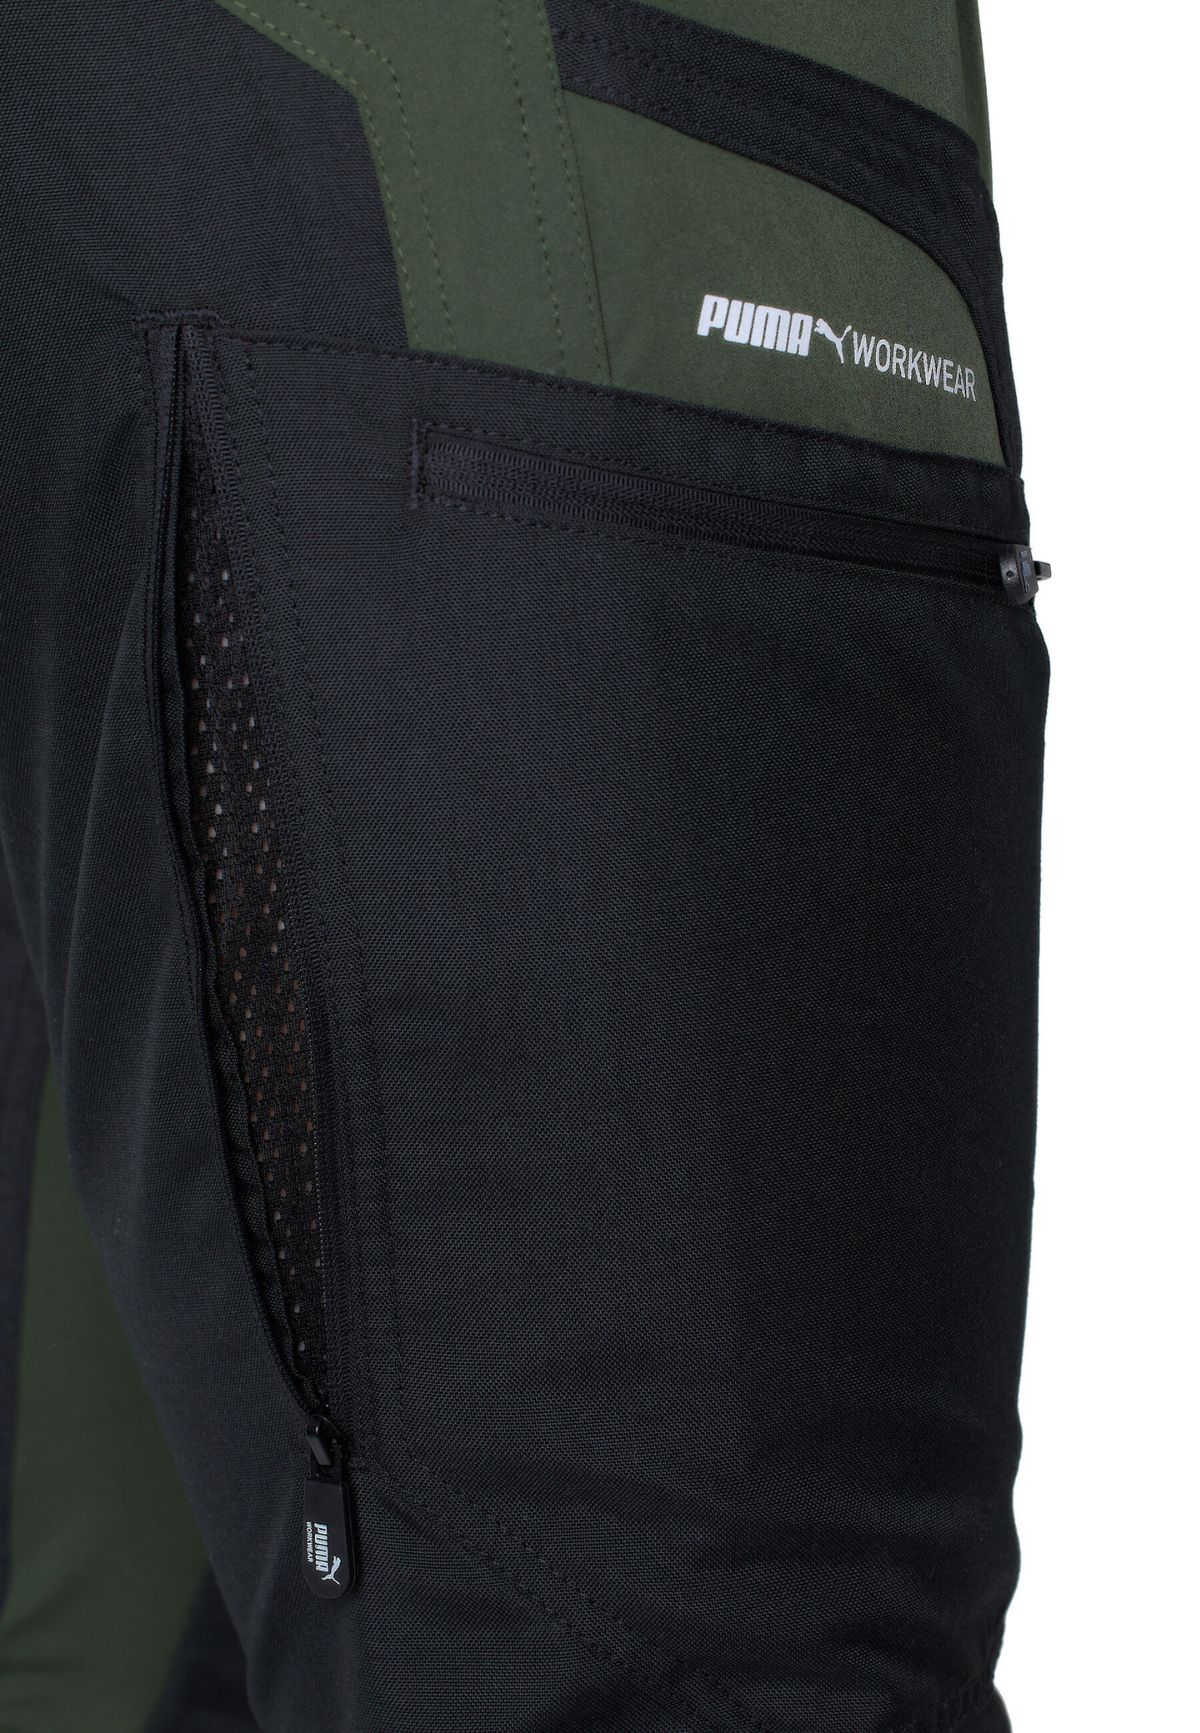 PUMA Workwear Pro | Herren Outdoorhose One Puma Workwear